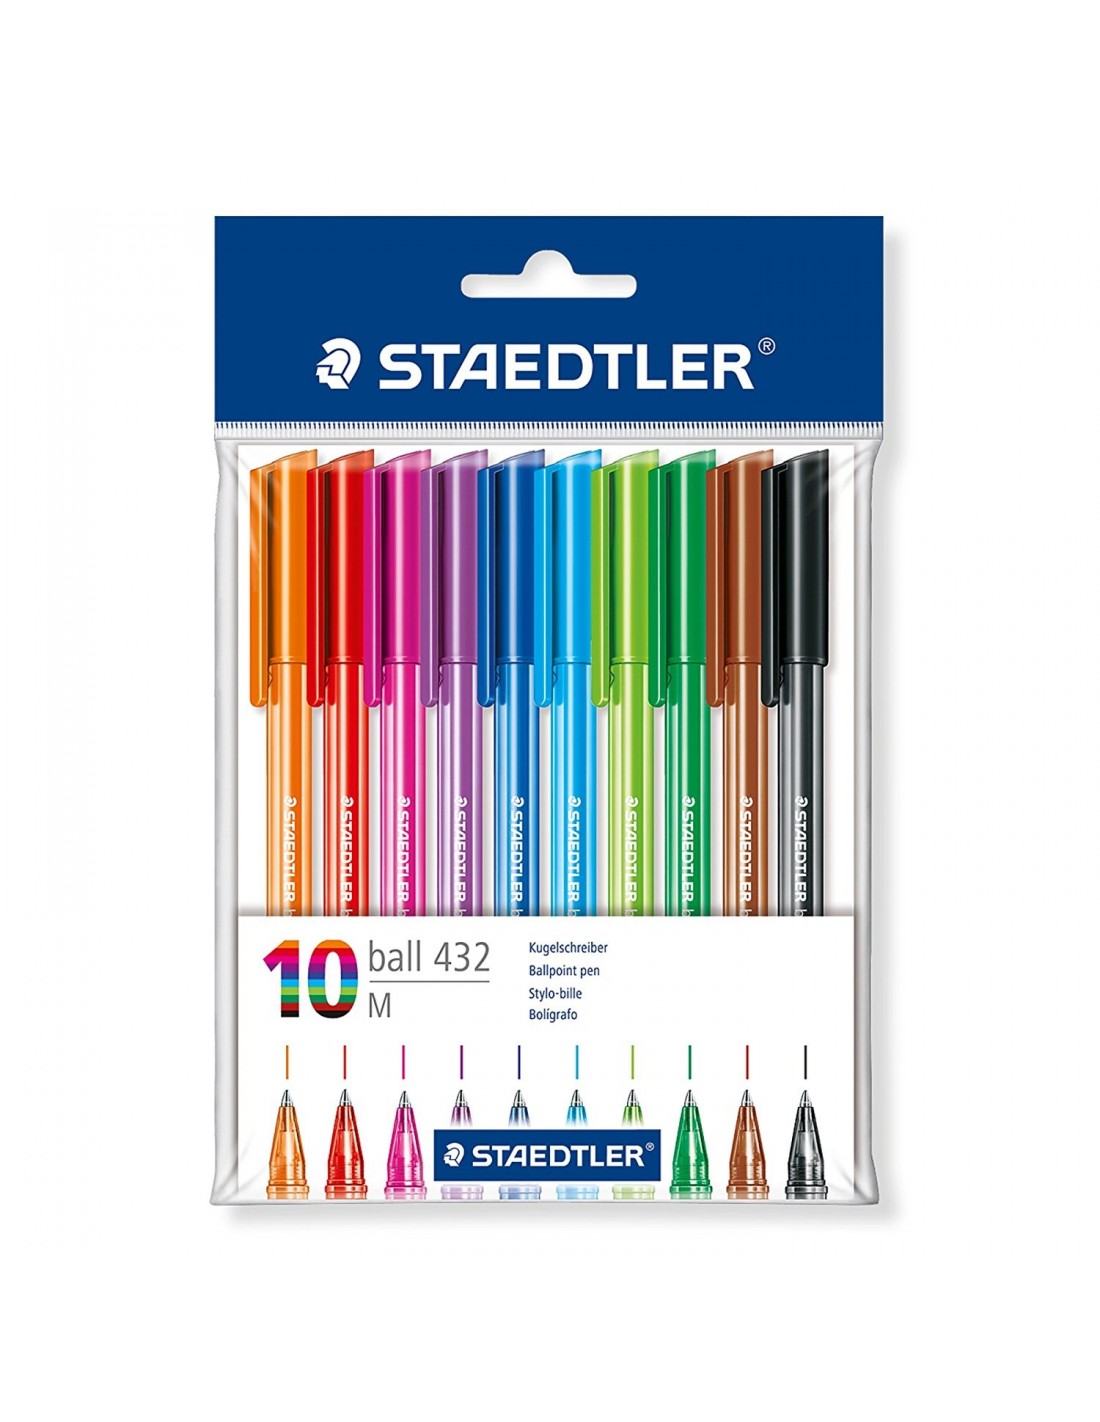 Bolígrafo STAEDTLER 10 colores